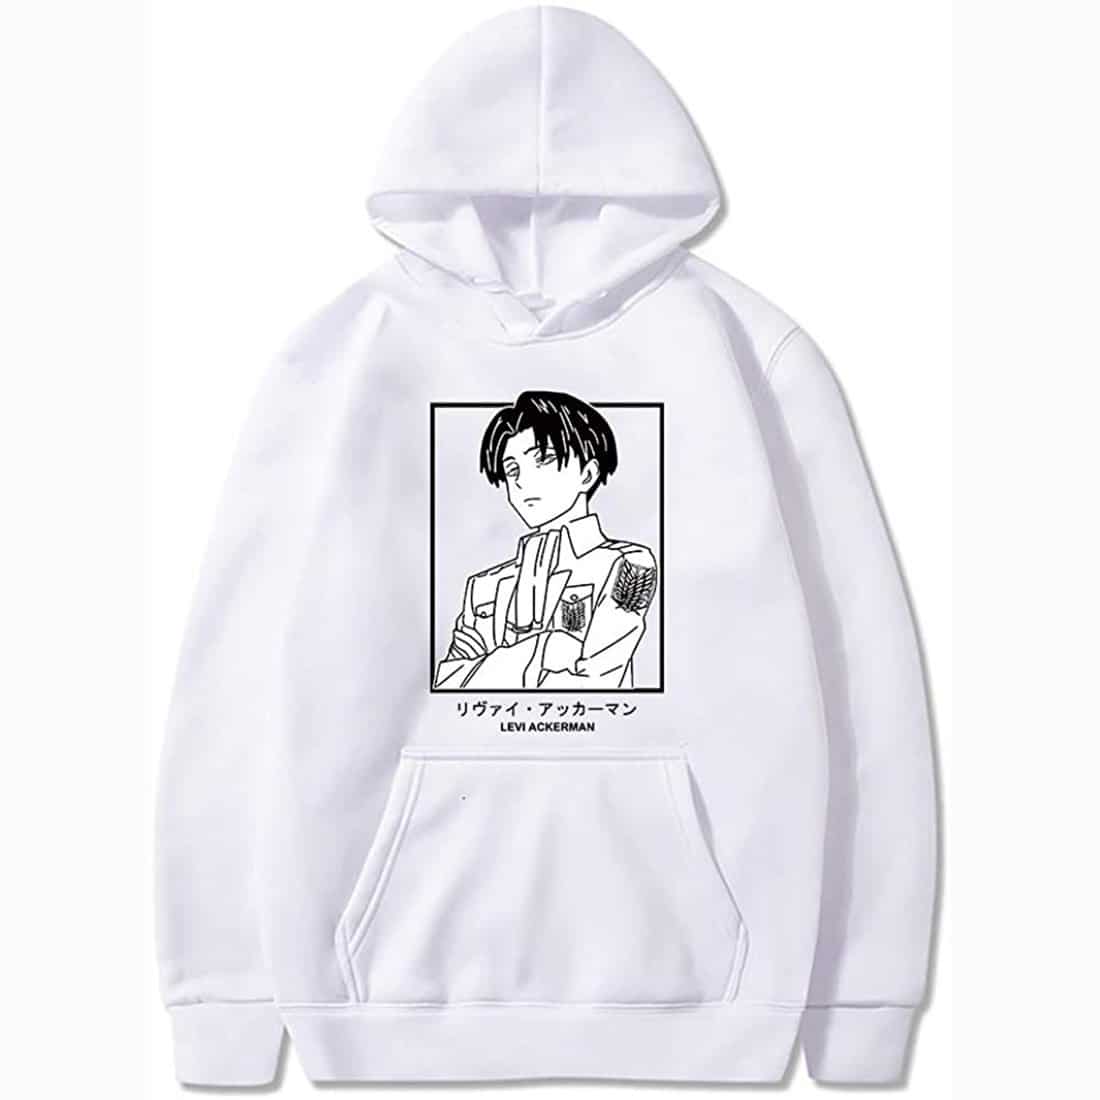 Unisex Anime Attack on Titan Ackerman Levi Printed Cotton Cozy Hoodies Hooded Sweatshirts Pullovers Tops